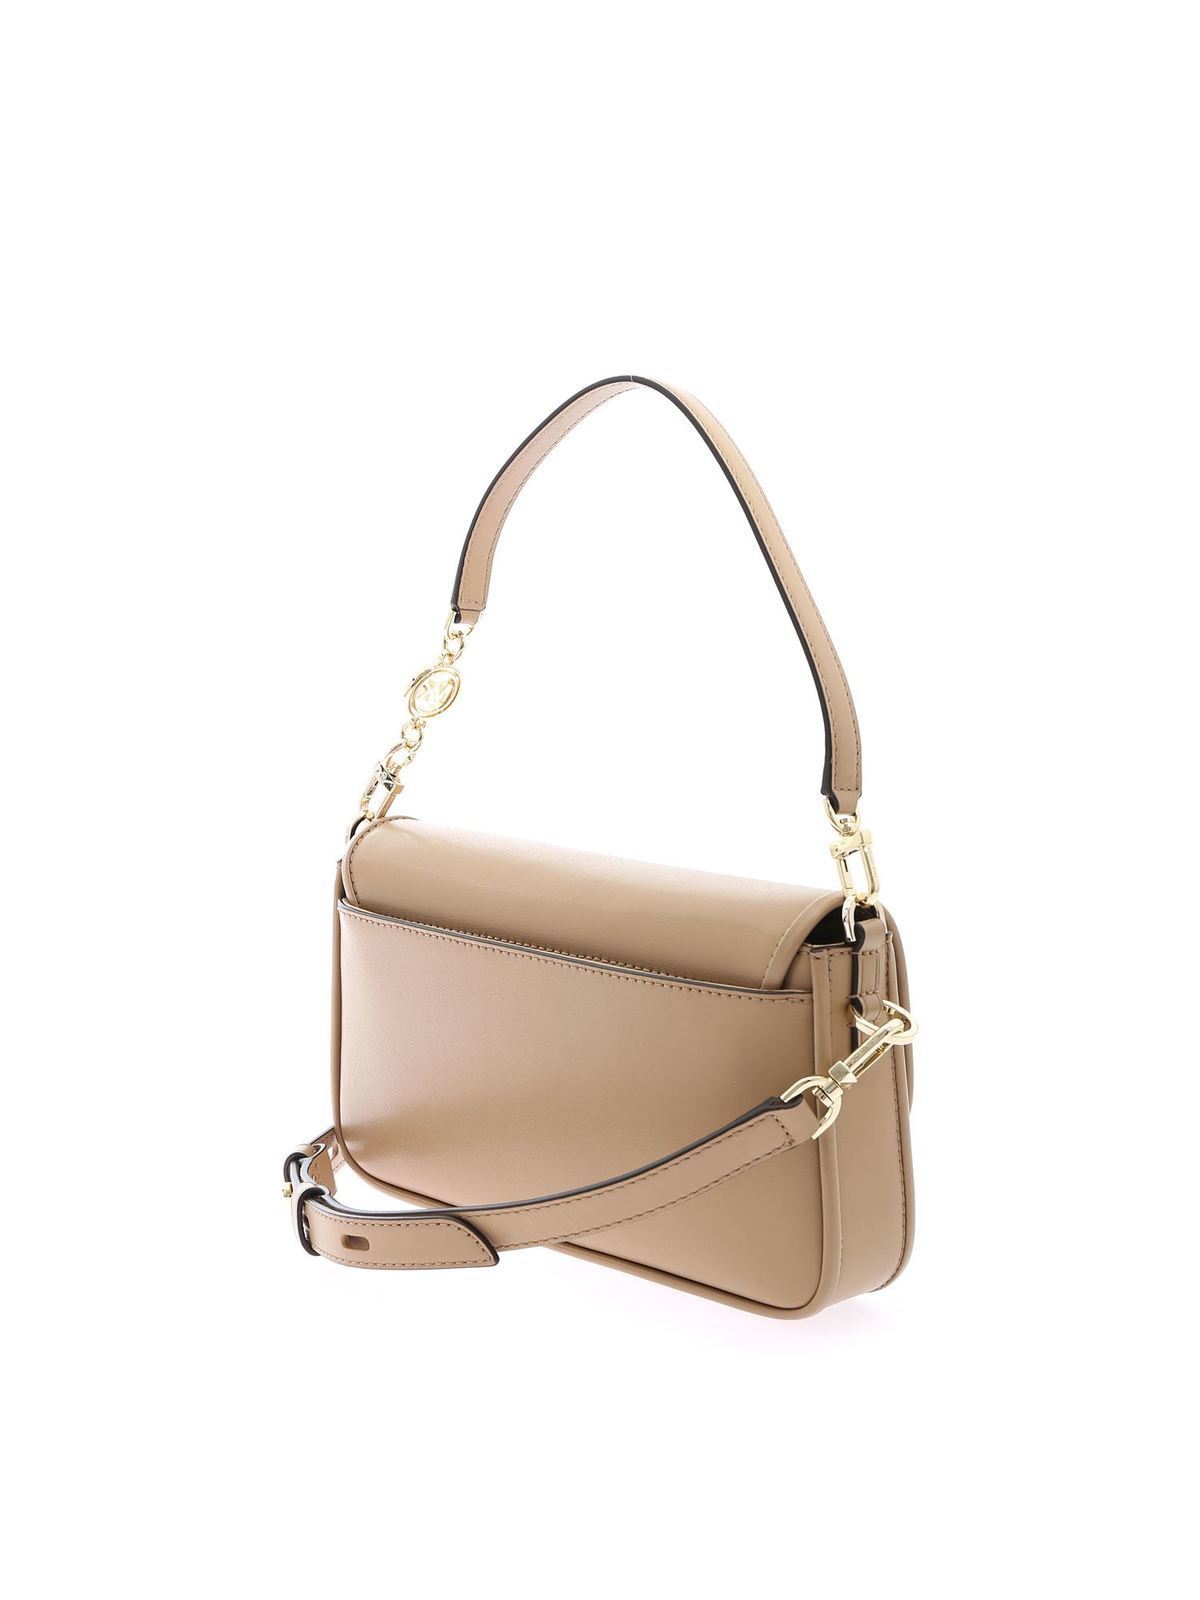 MICHAEL KORS MK Pebbled Leather Chain Strap women039s shoulder bag SOFT  Beige New  eBay